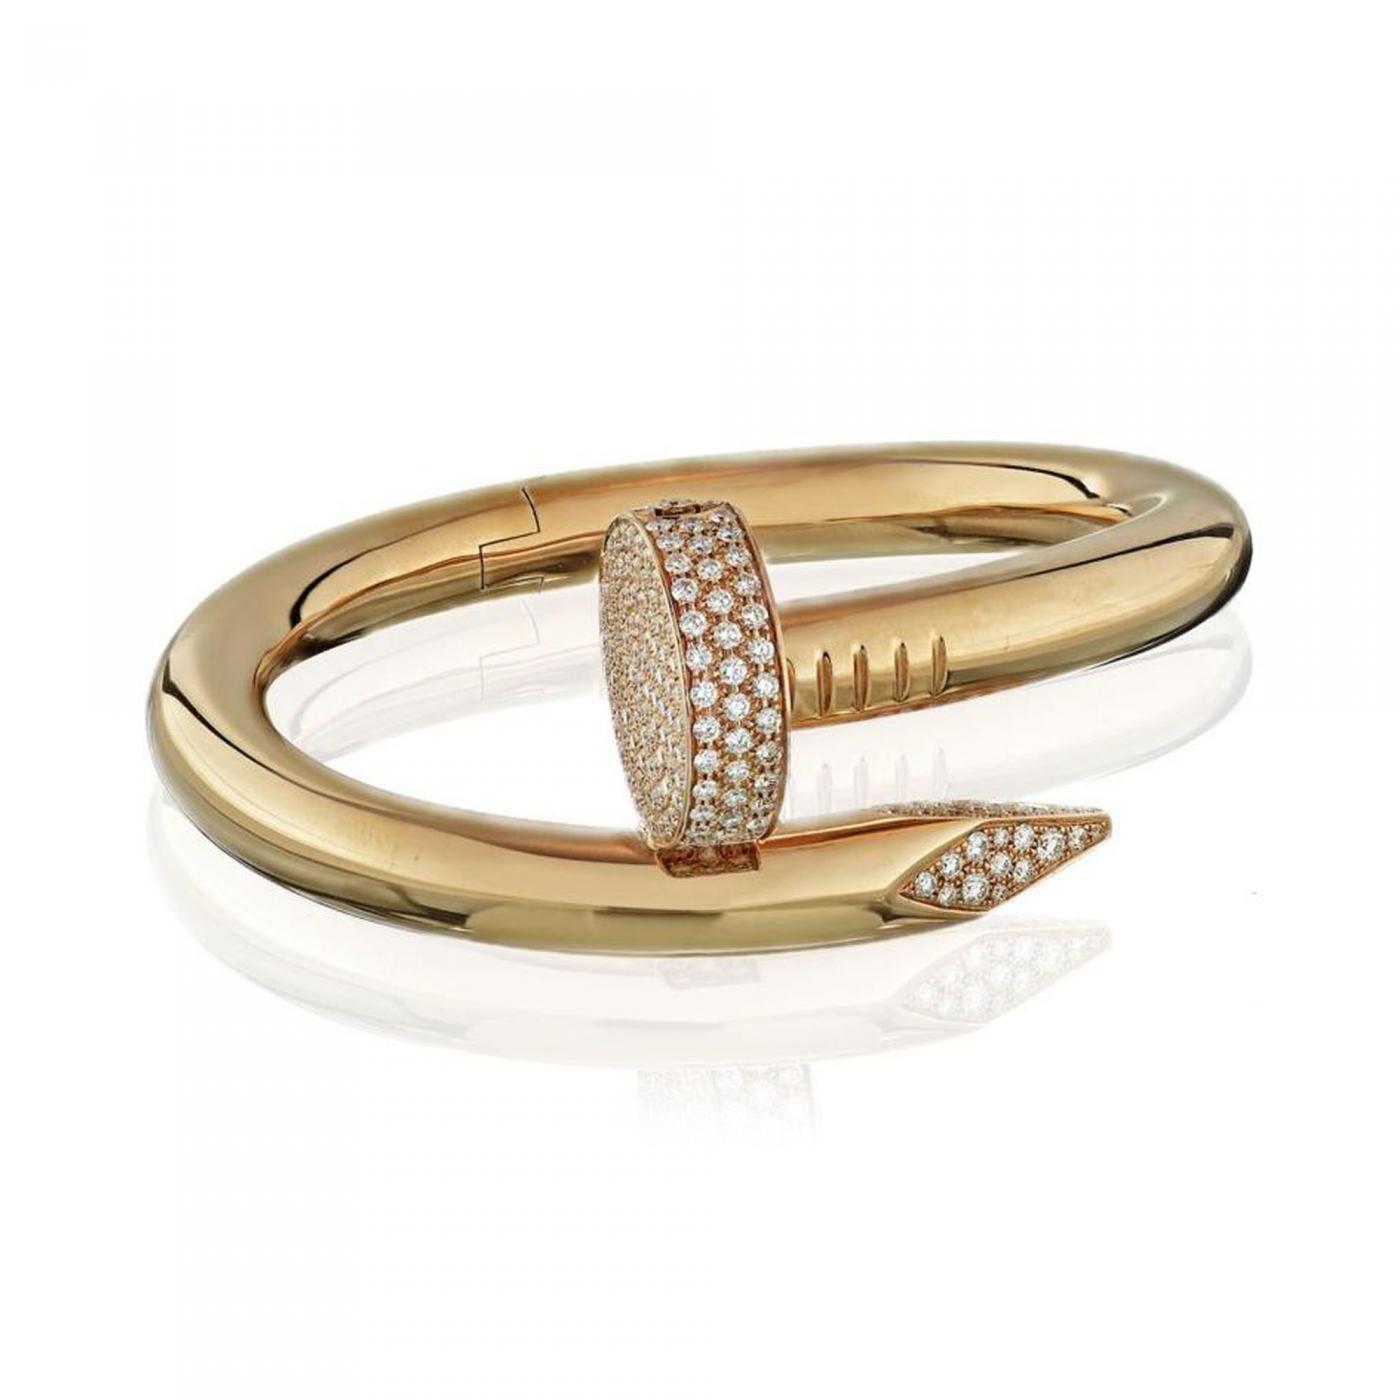 Cartier Juste un Clou 18k Pink Gold and Pave Diamond Bracelet Size 18